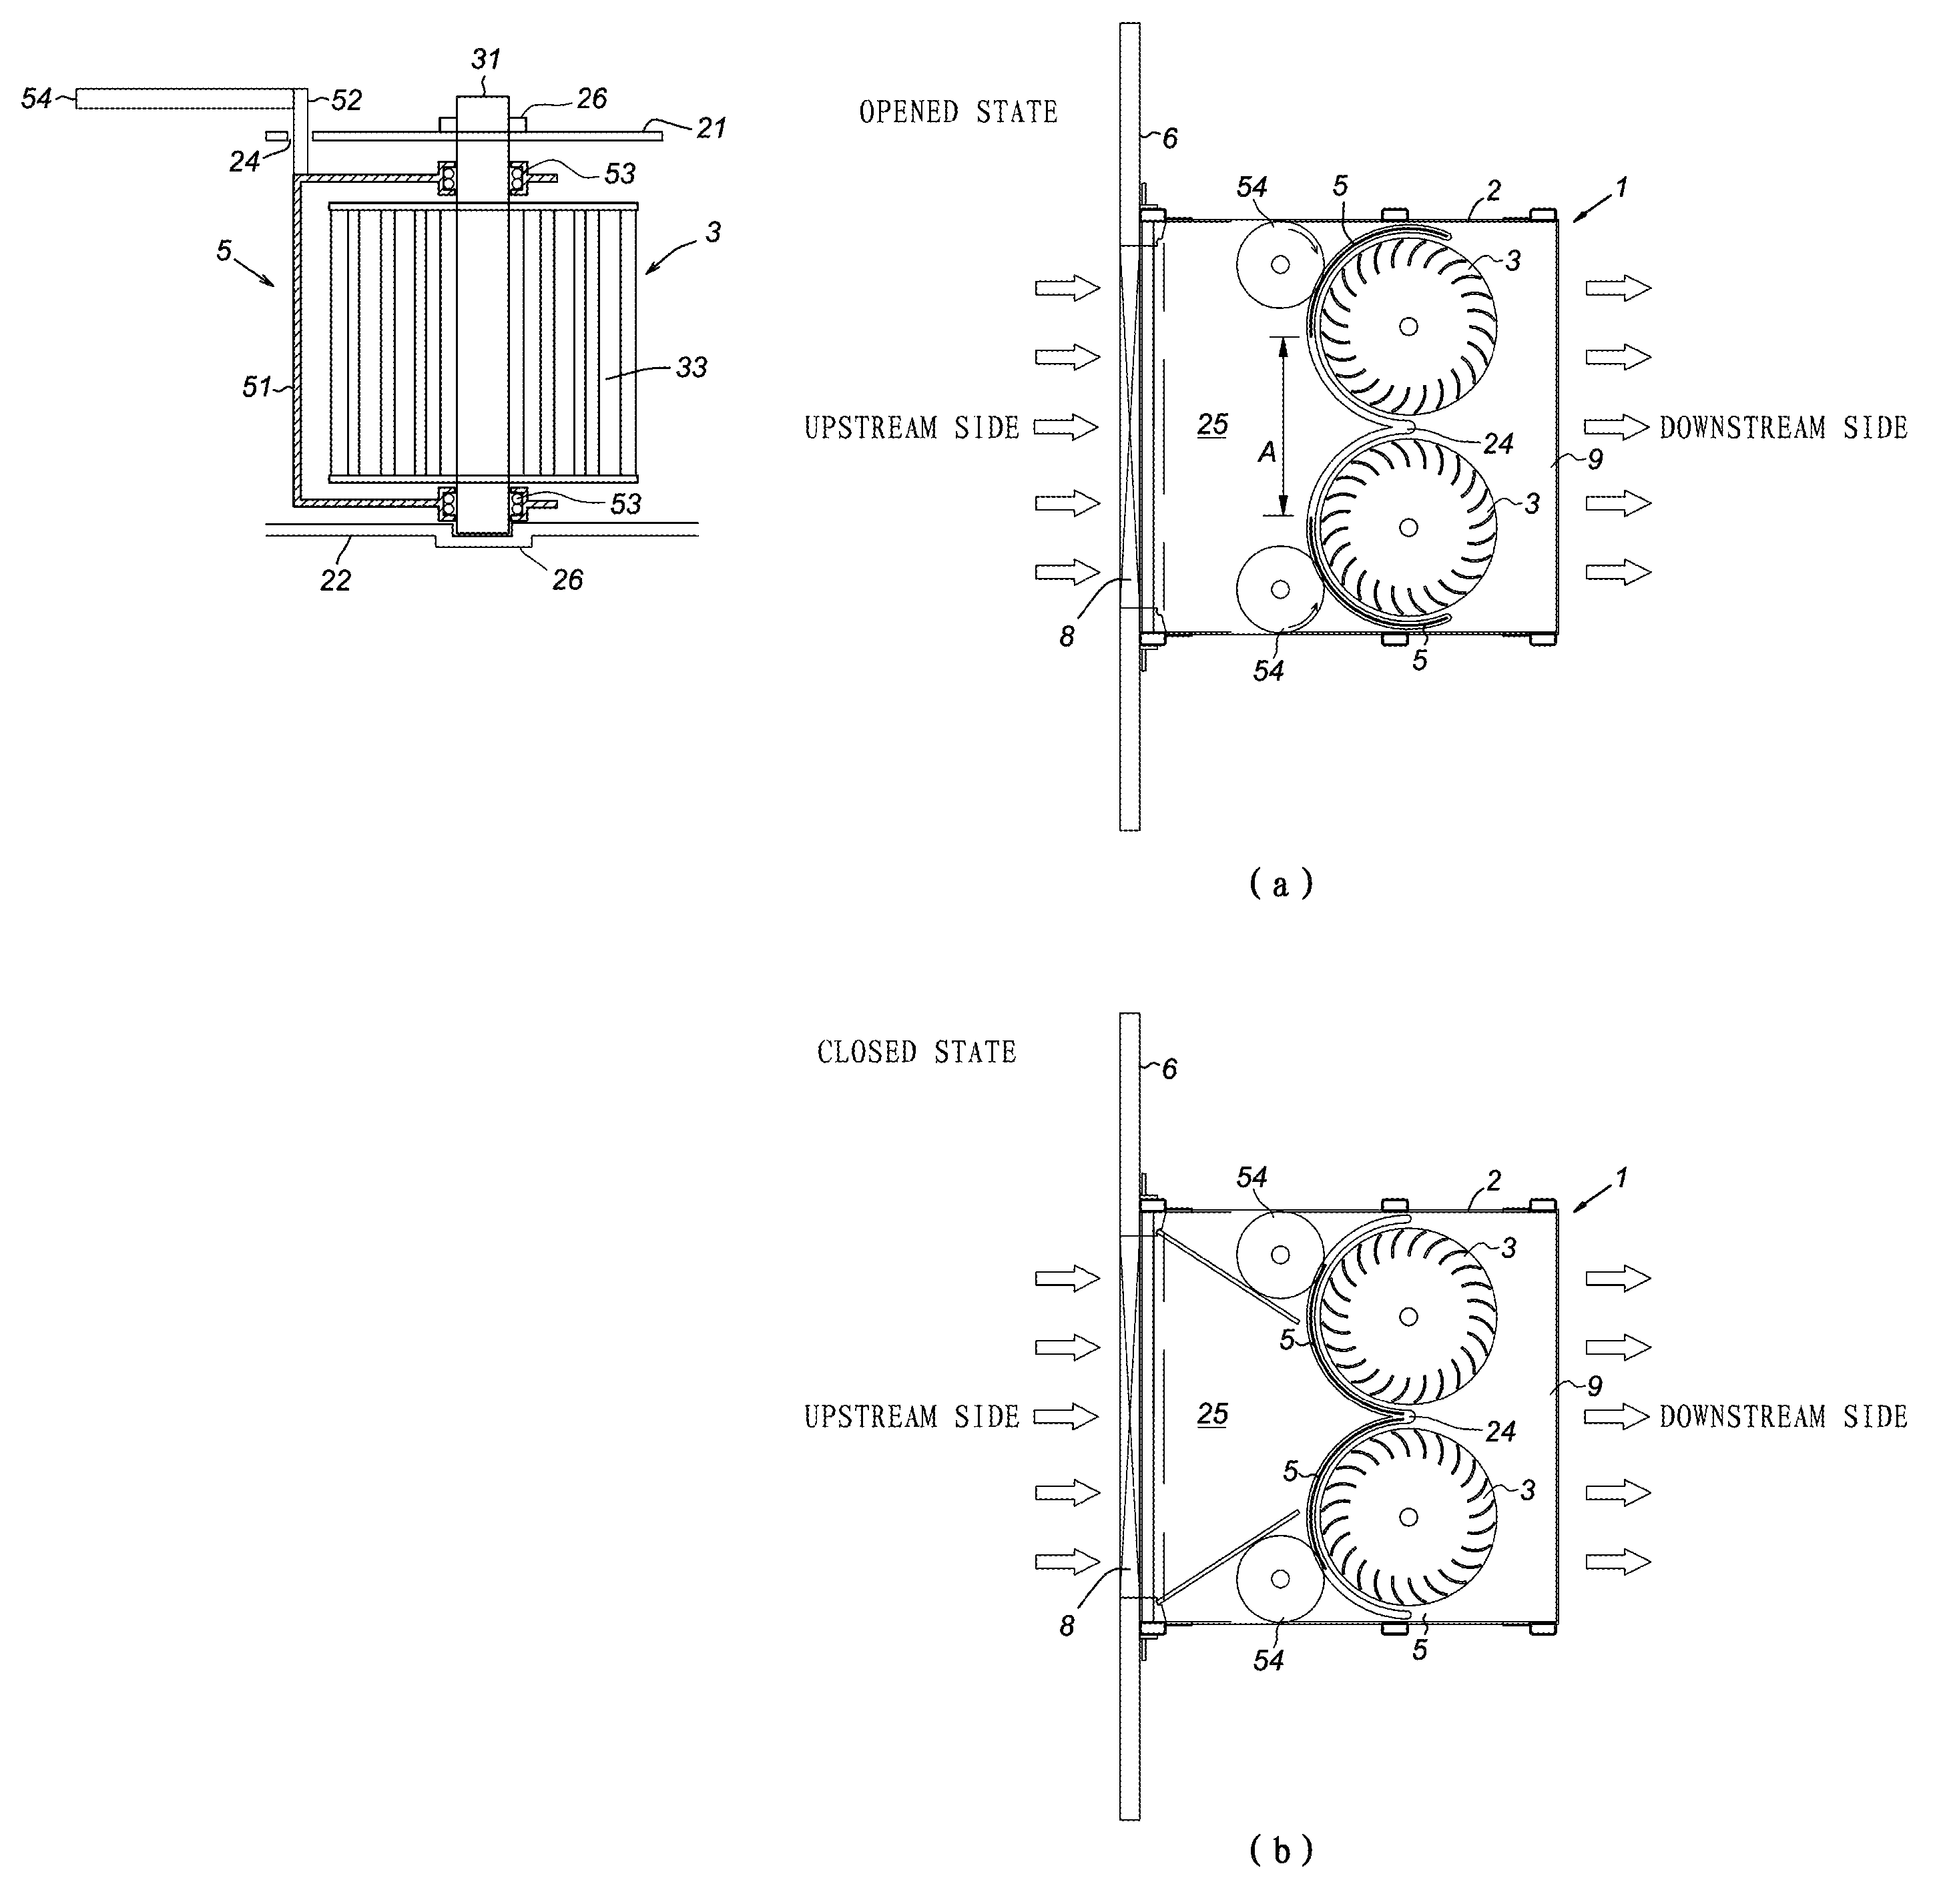 Hydraulic power generating apparatus